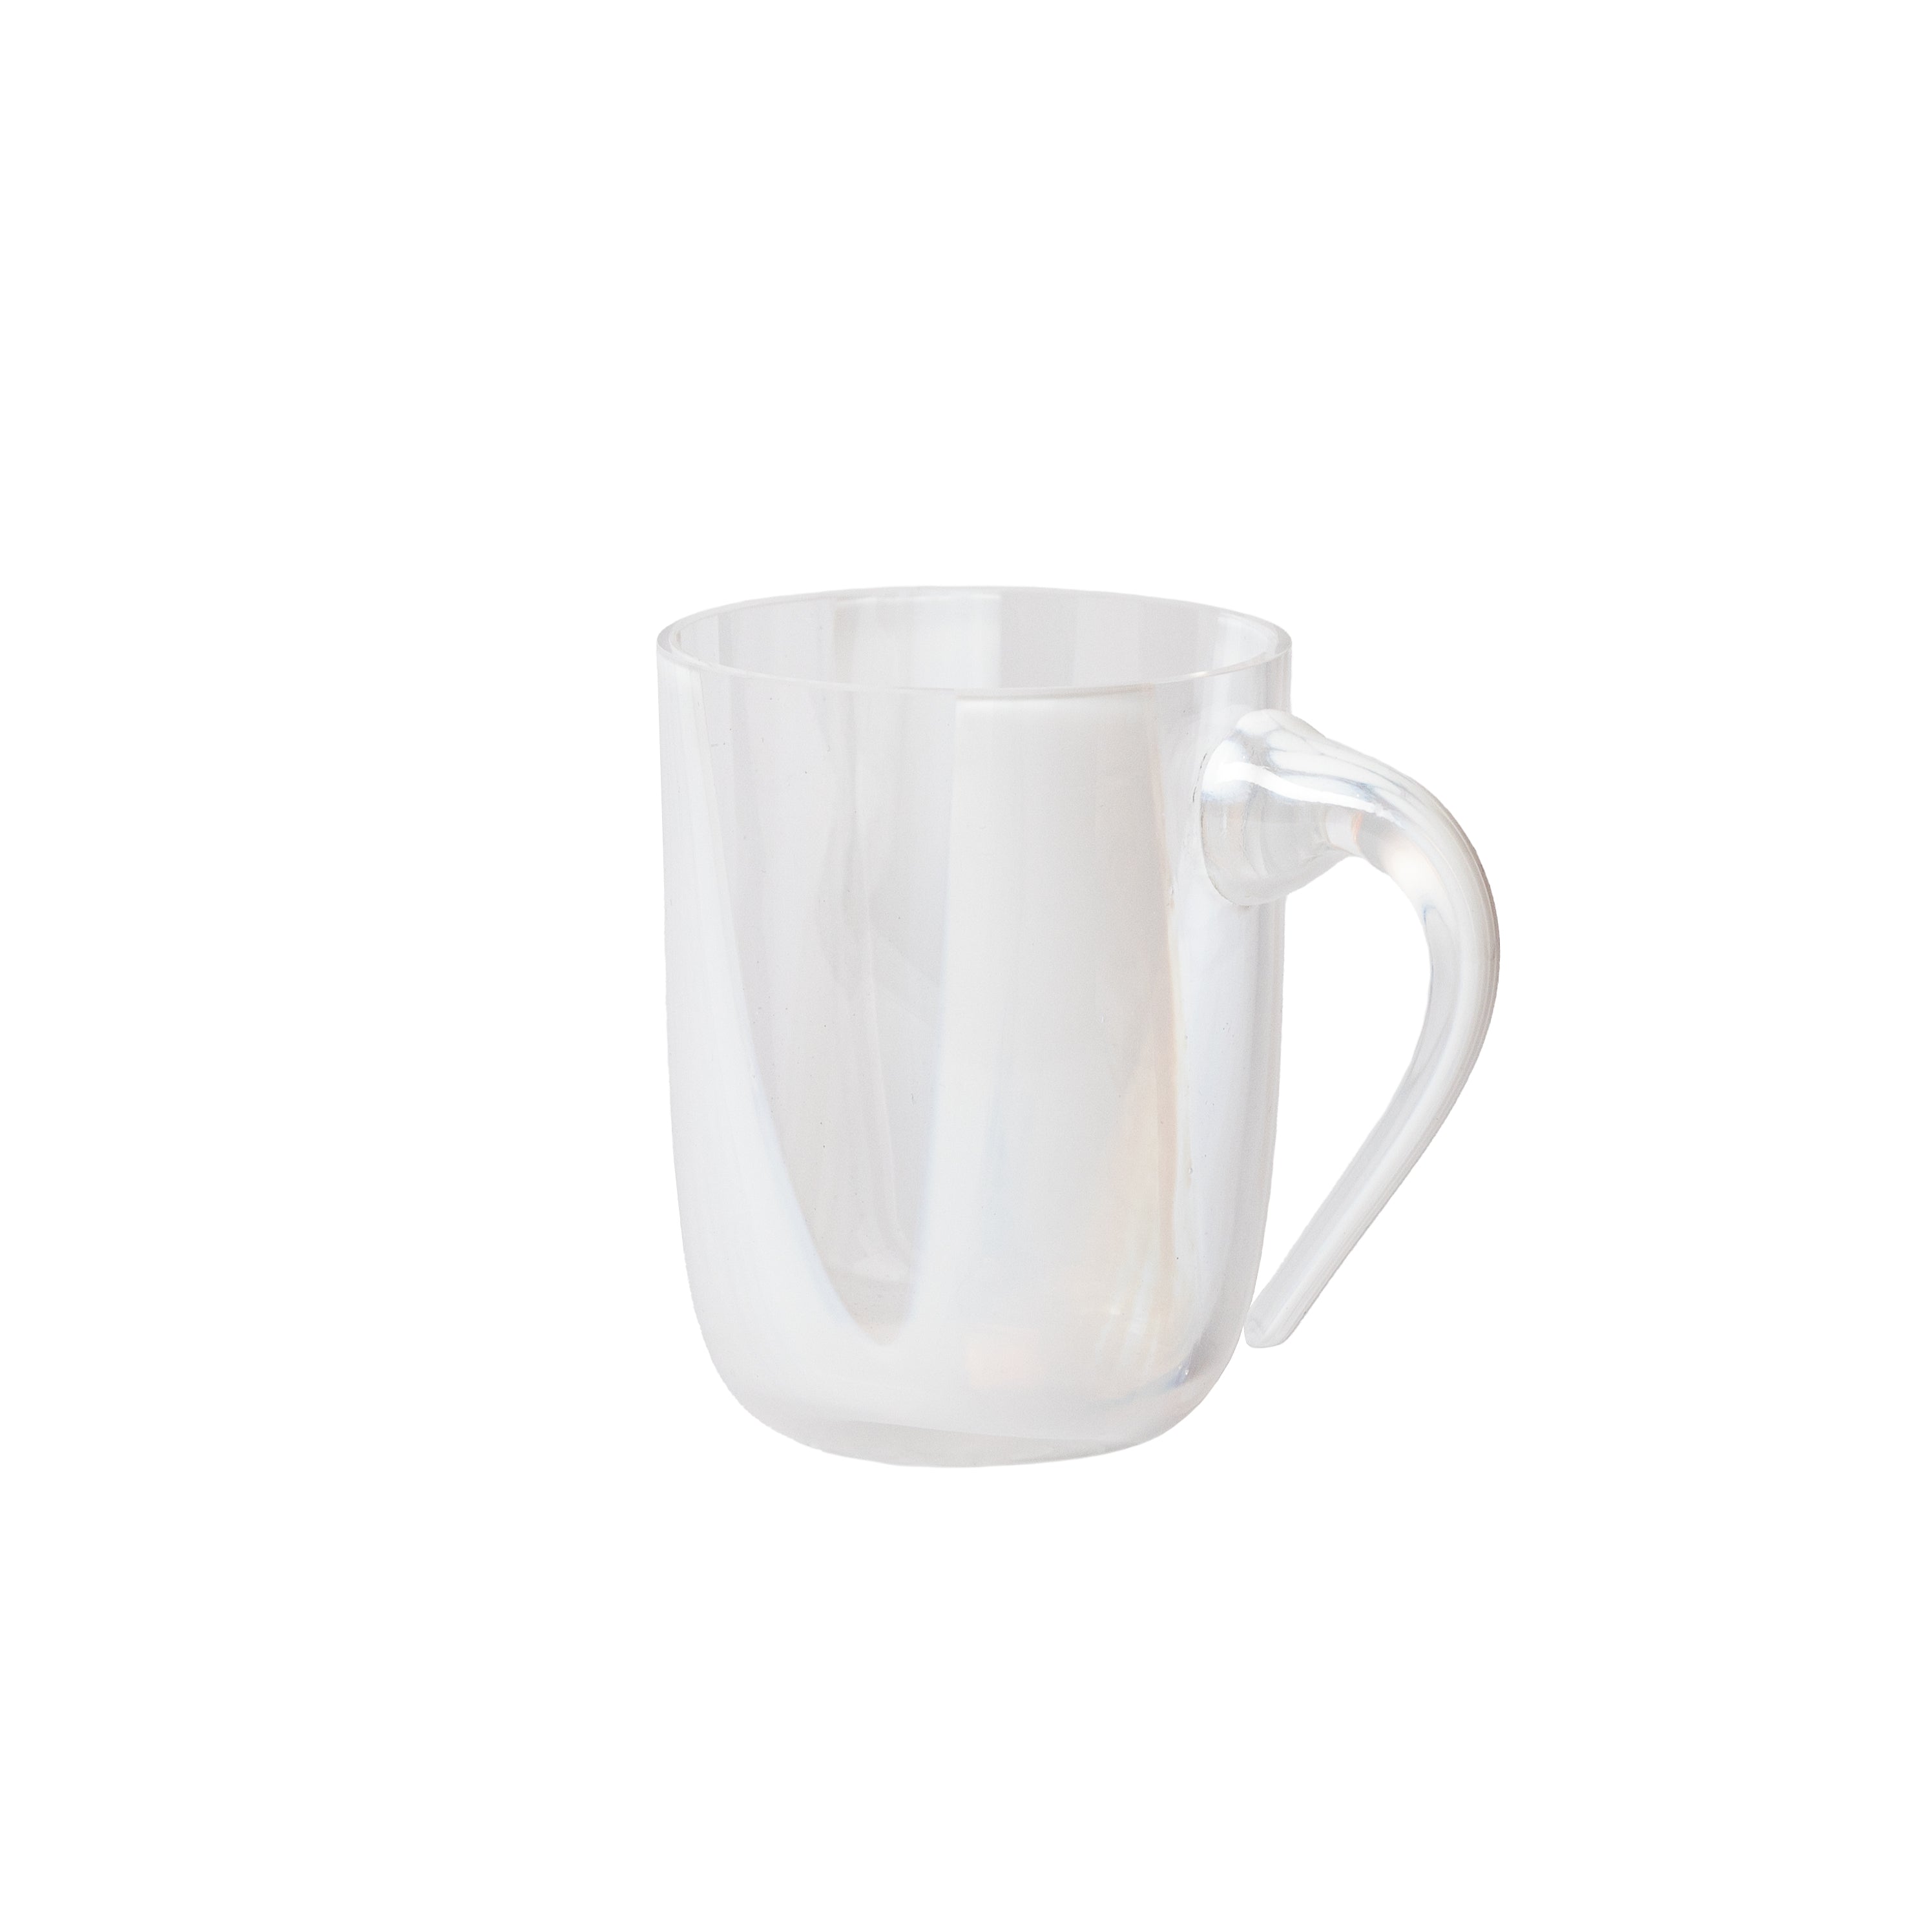 White glass mug